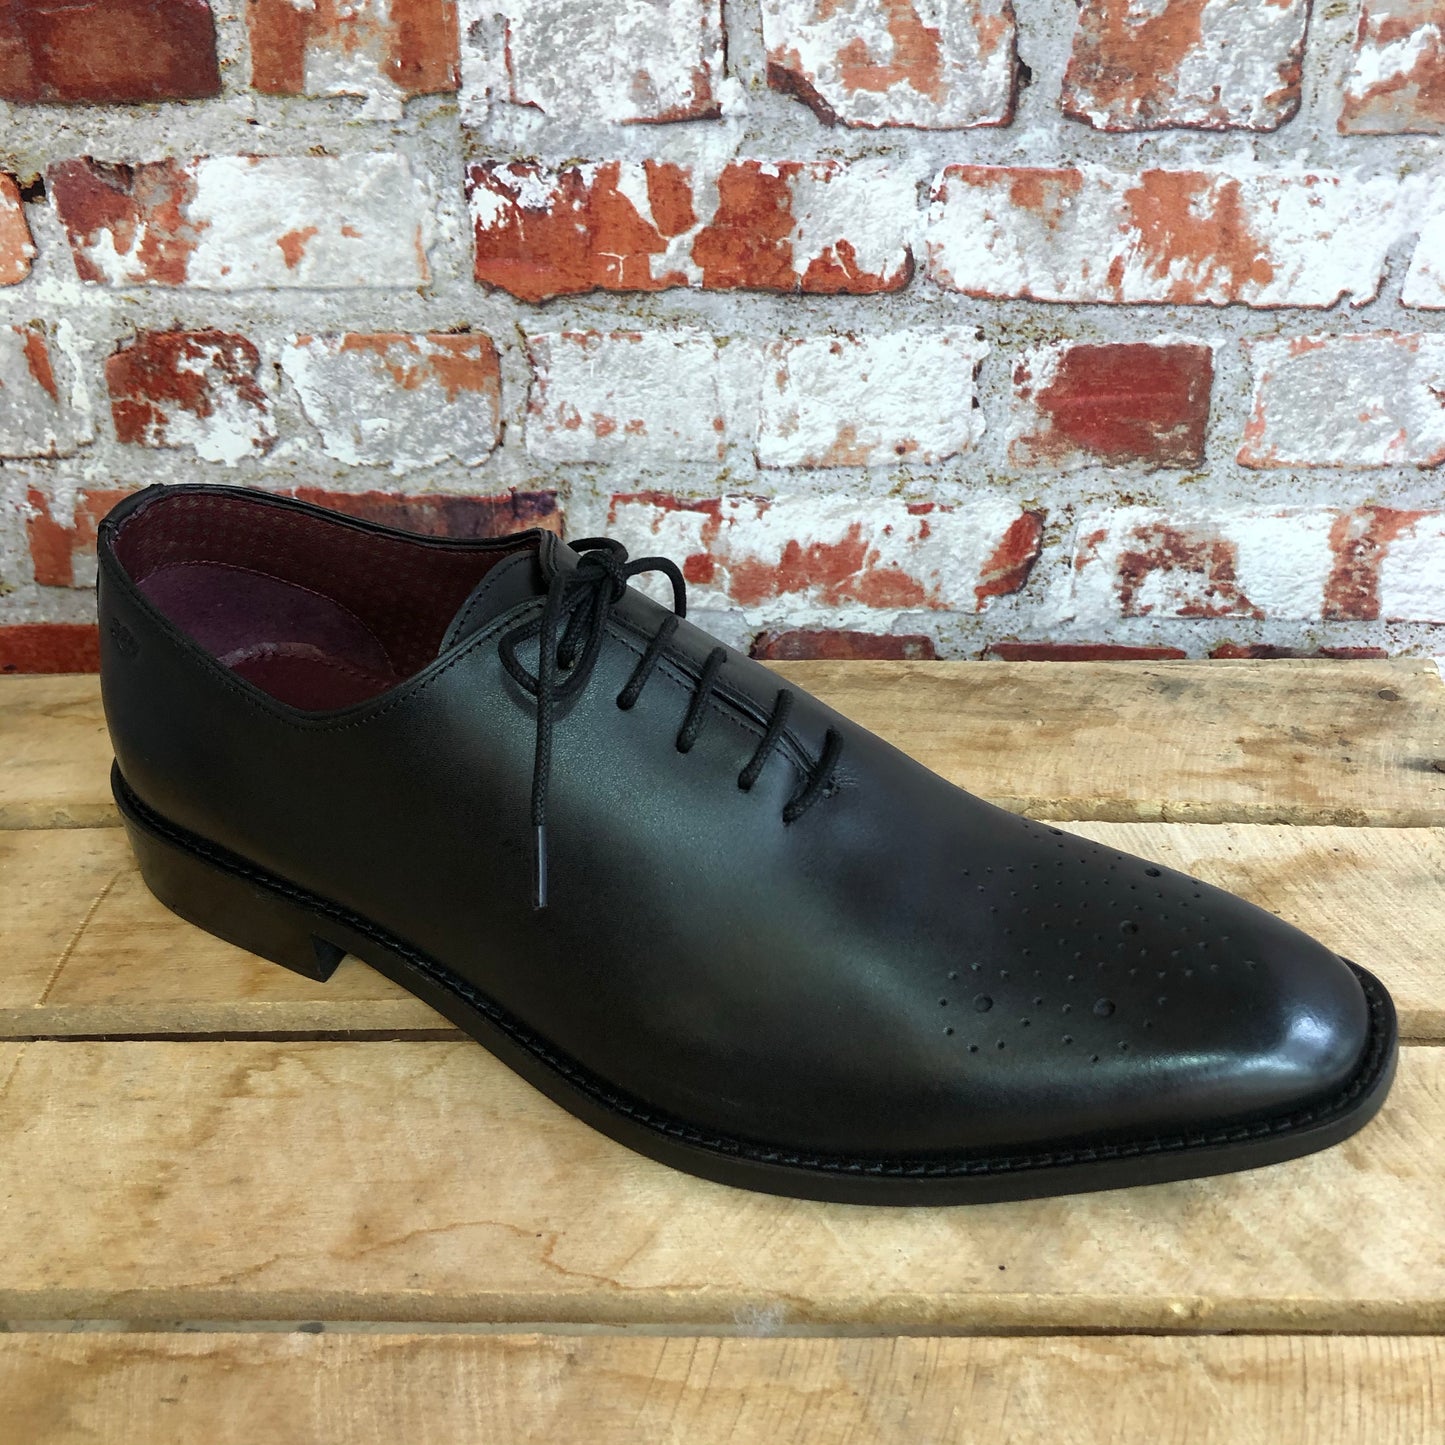 London Brogues - Black Leather Dress Shoe